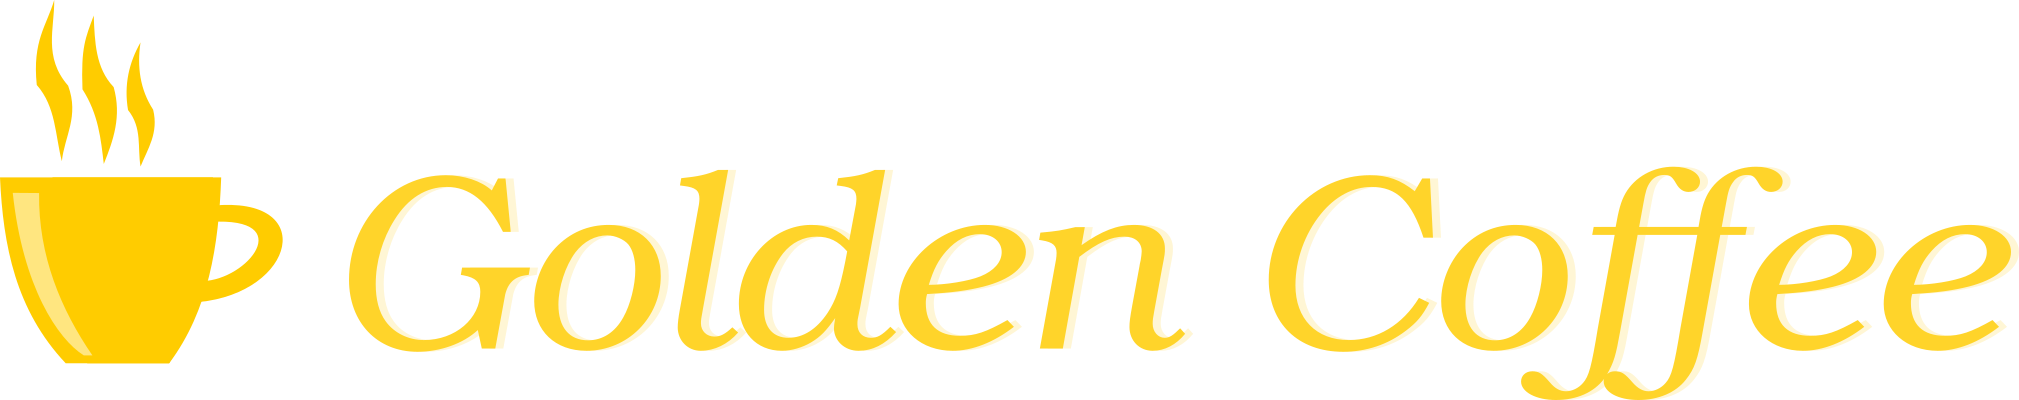 Golden Coffee logo